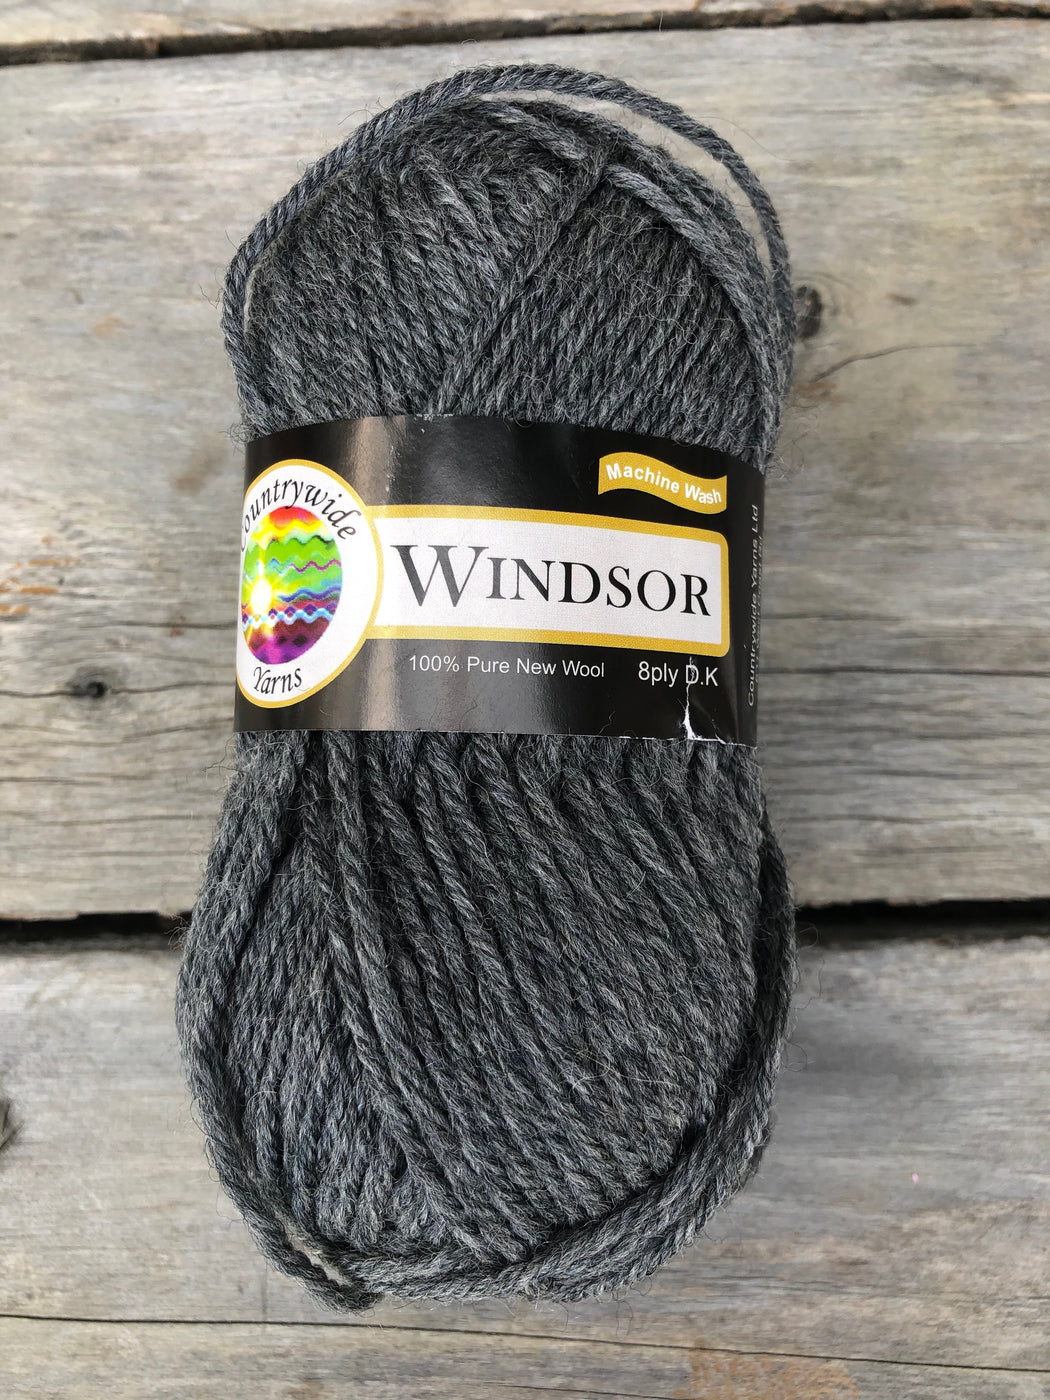 Windsor DK/8ply